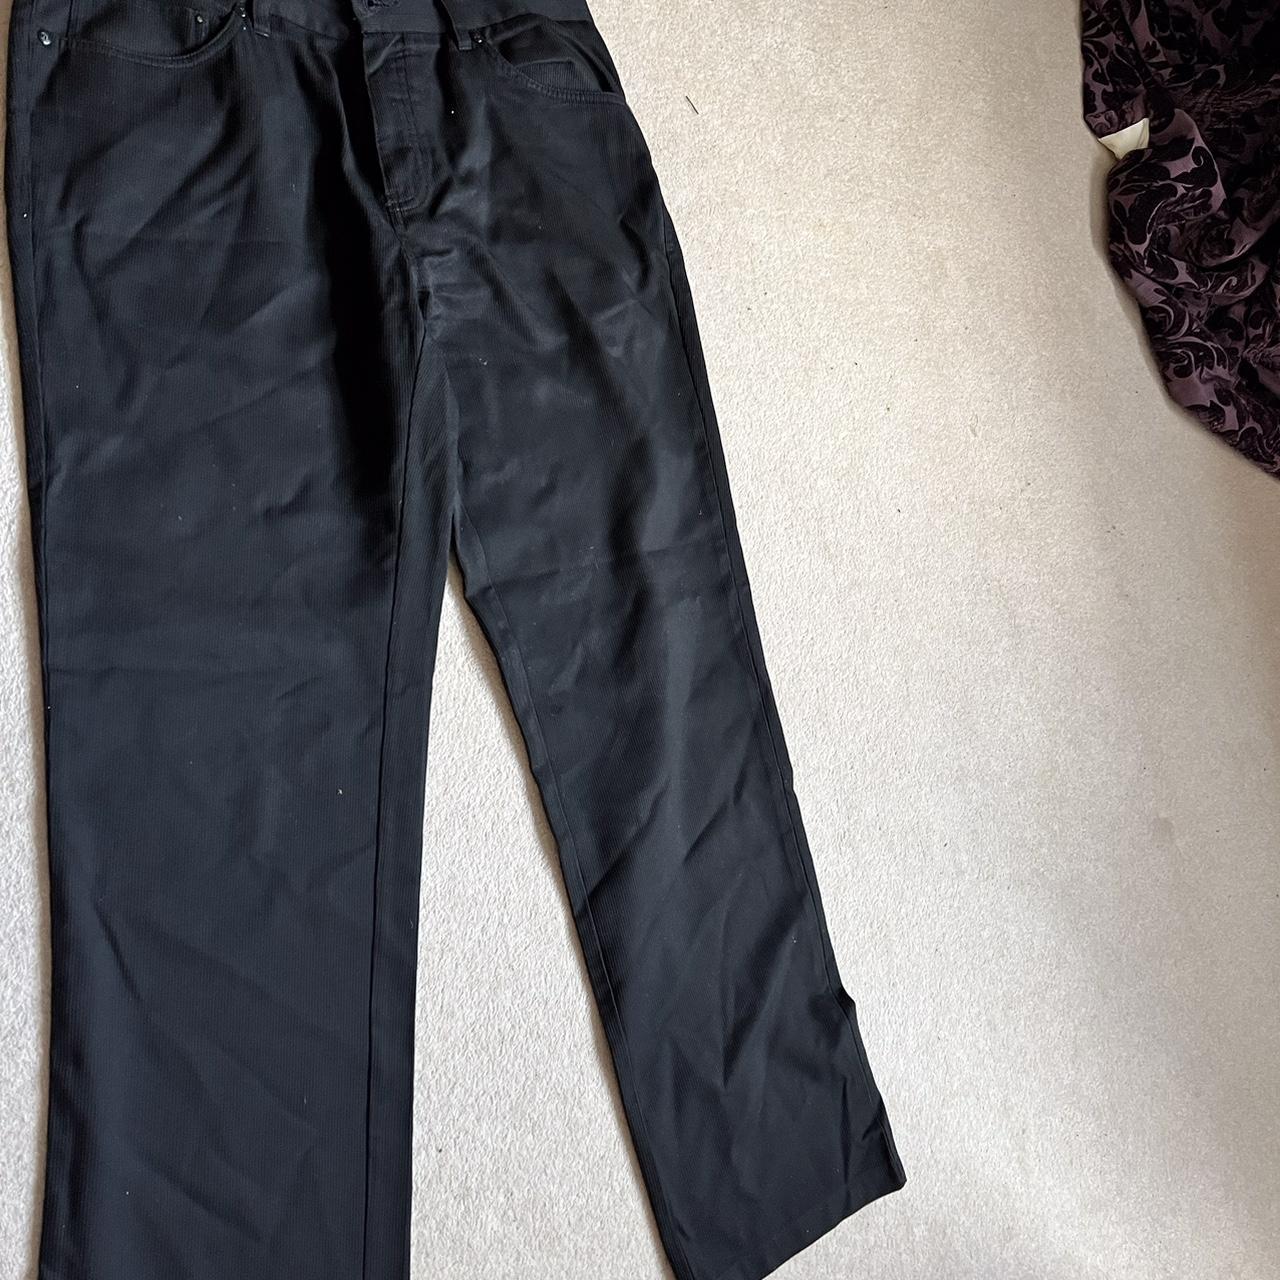 Designer jasper conran black trousers 34 w 31 l... - Depop